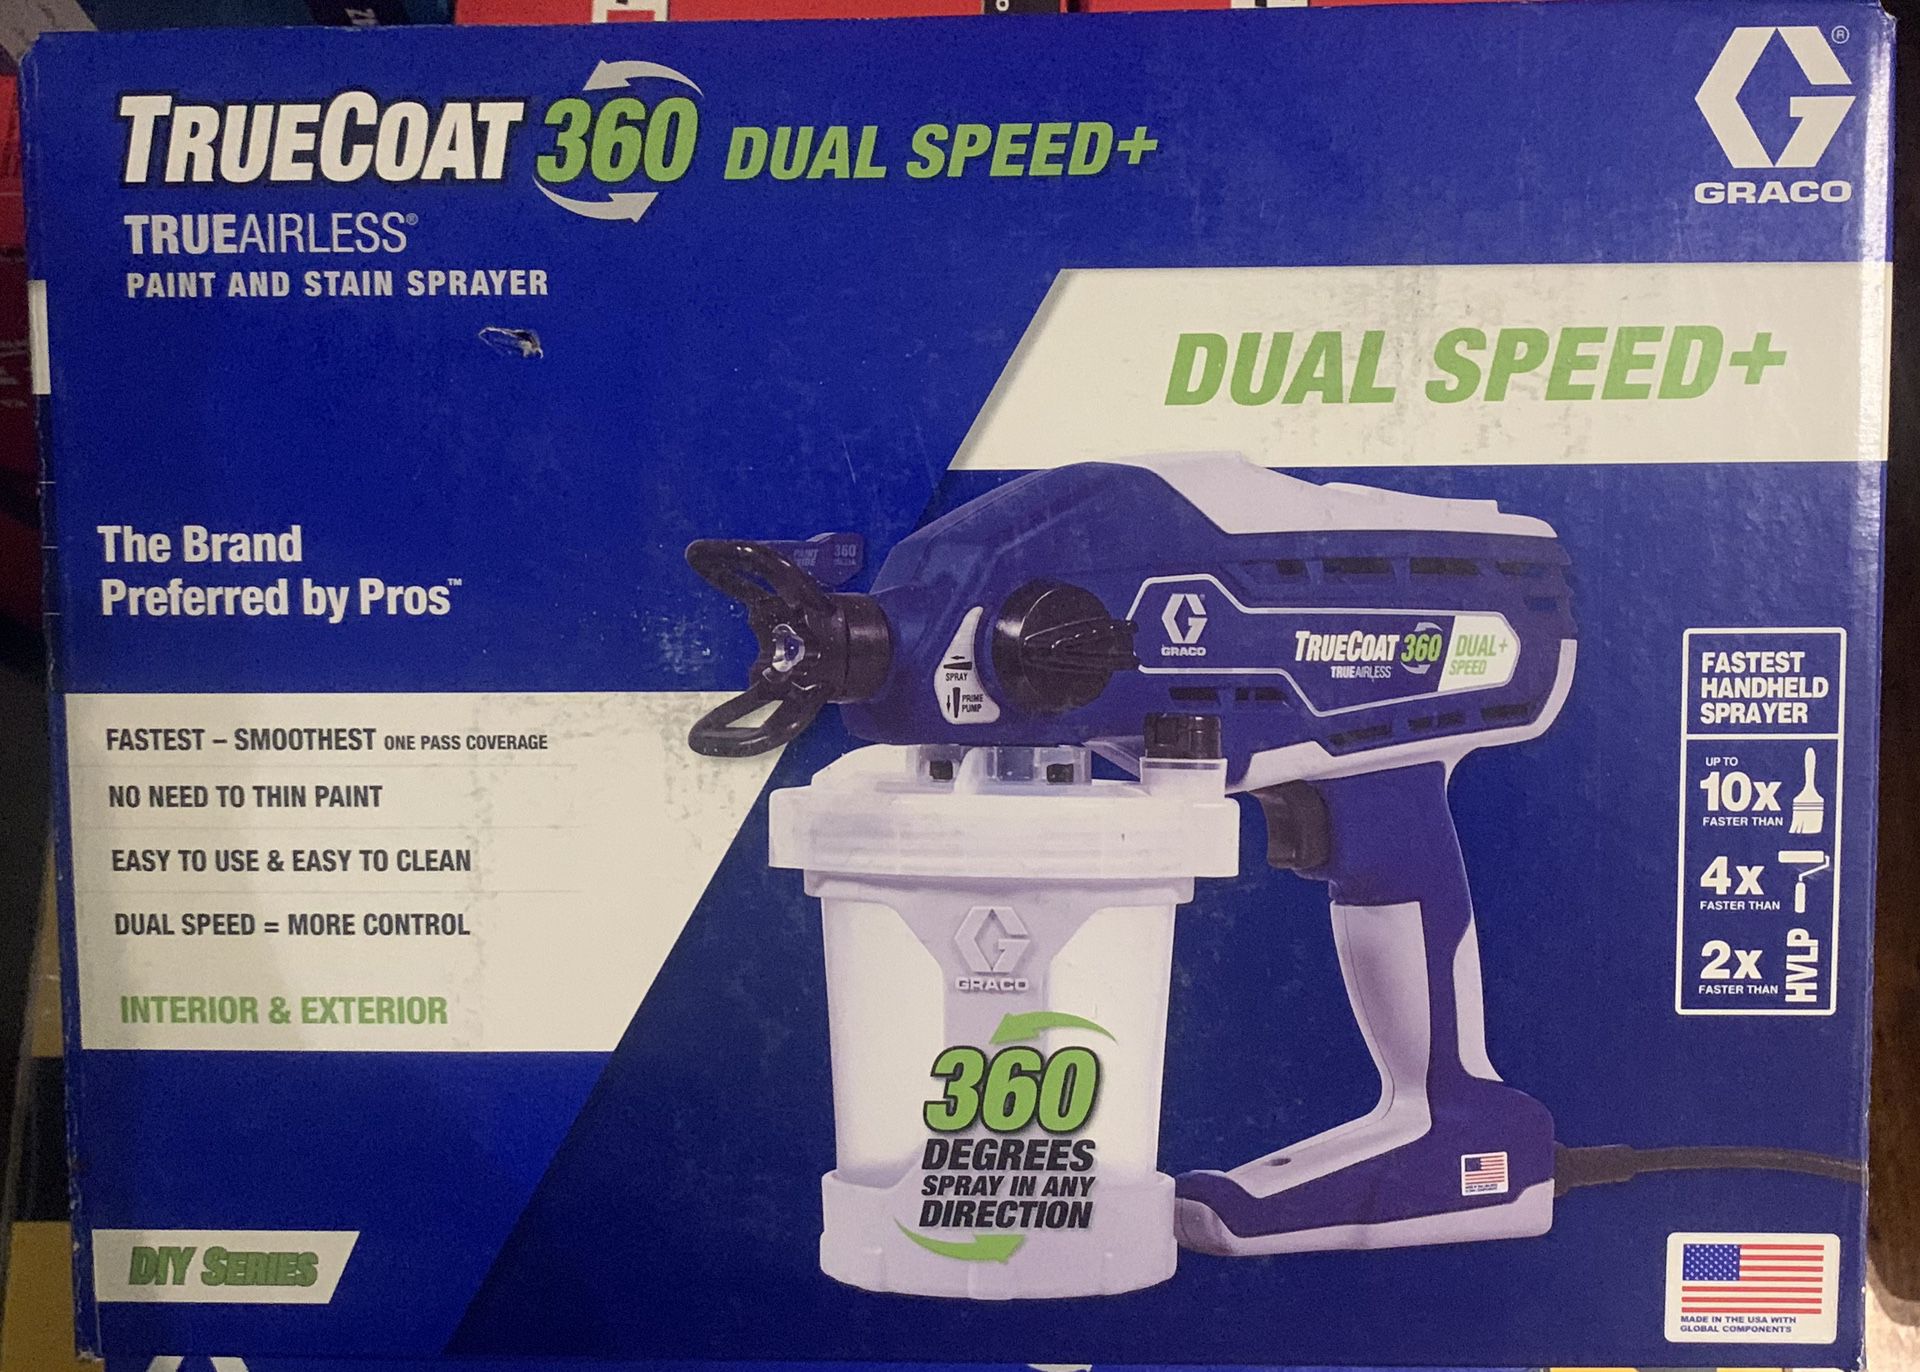 Graco TrueCoat 360 Dual Speed Plus Airless Paint Sprayer